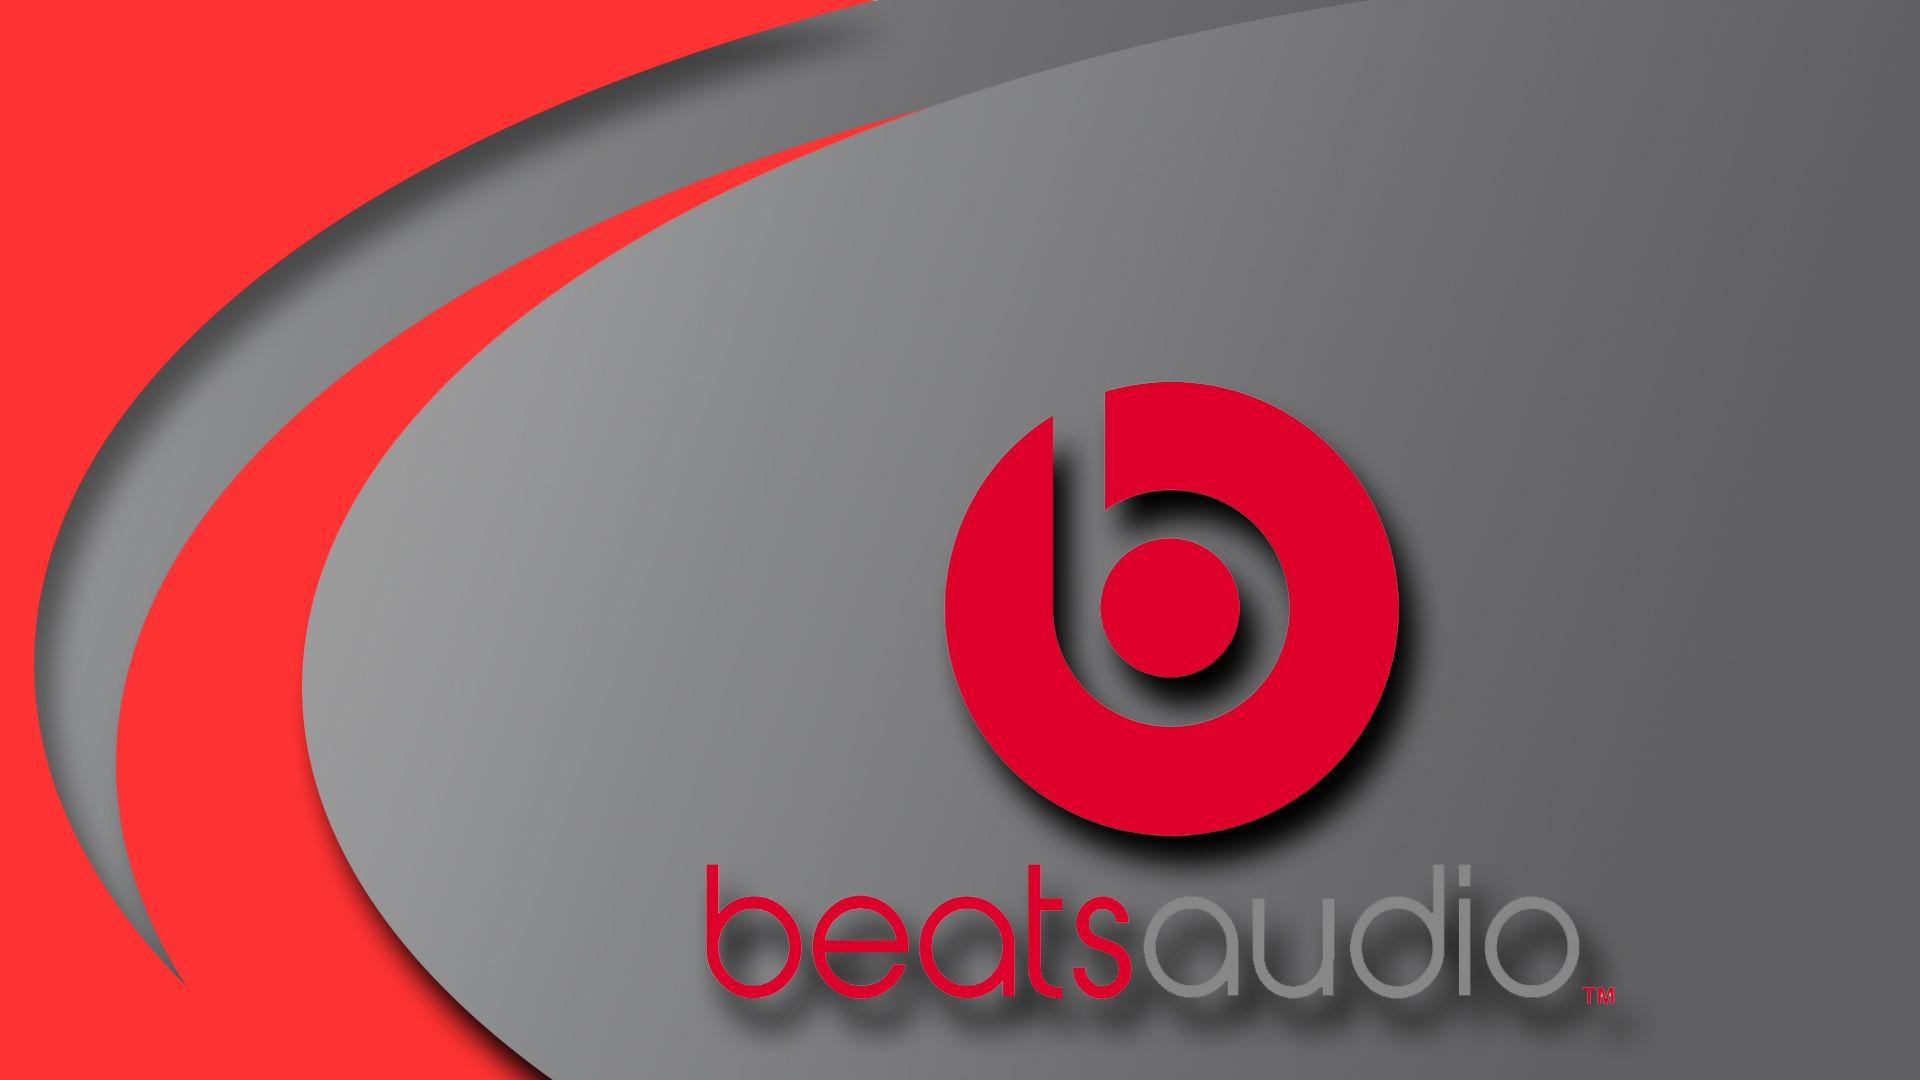 800x600px Beats Audio.02.2016